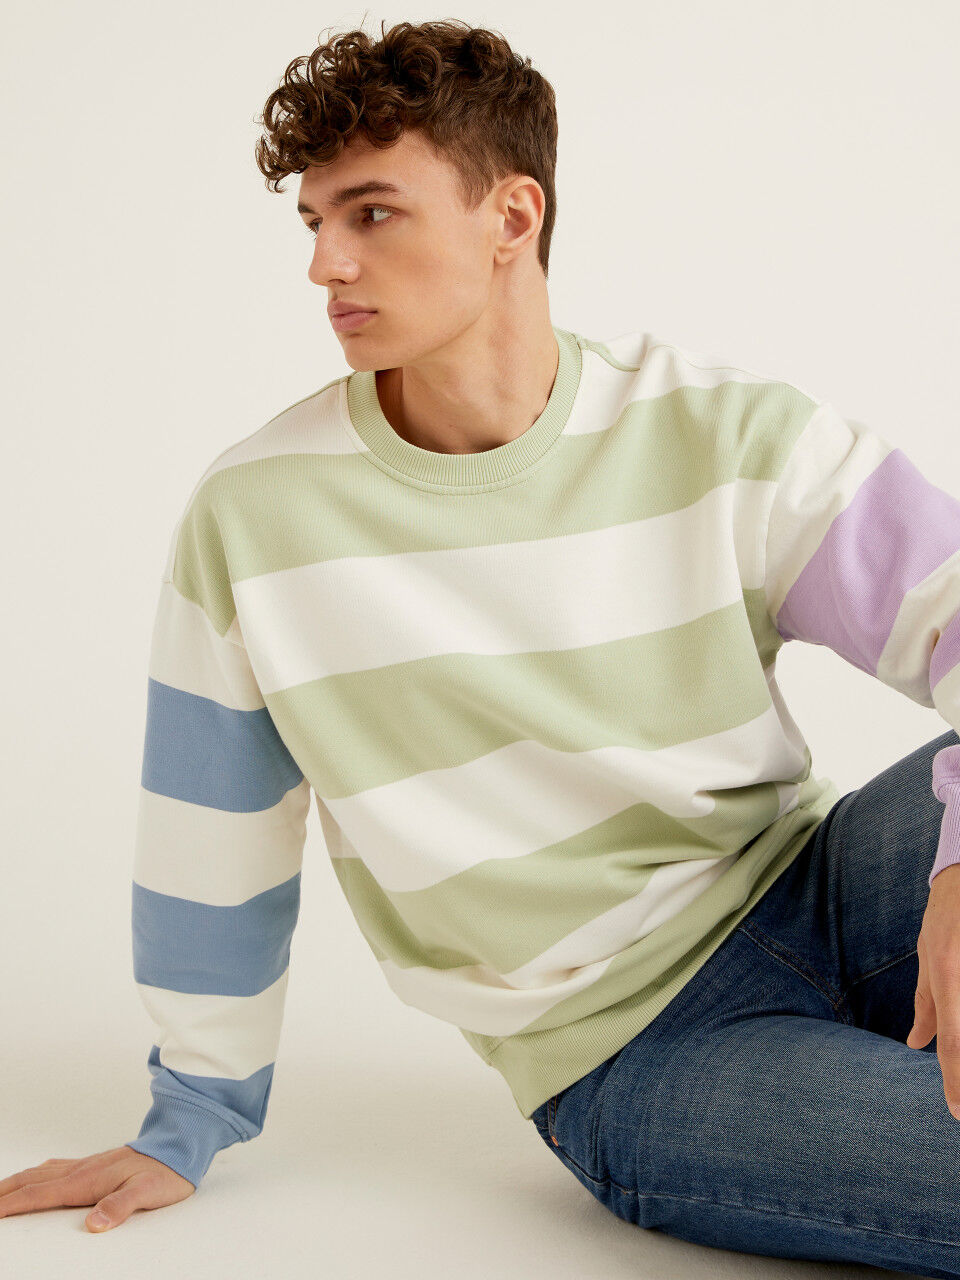 Sweatshirt. 65+ Best Spring & Summer Men's Outfit Ideas for 2022